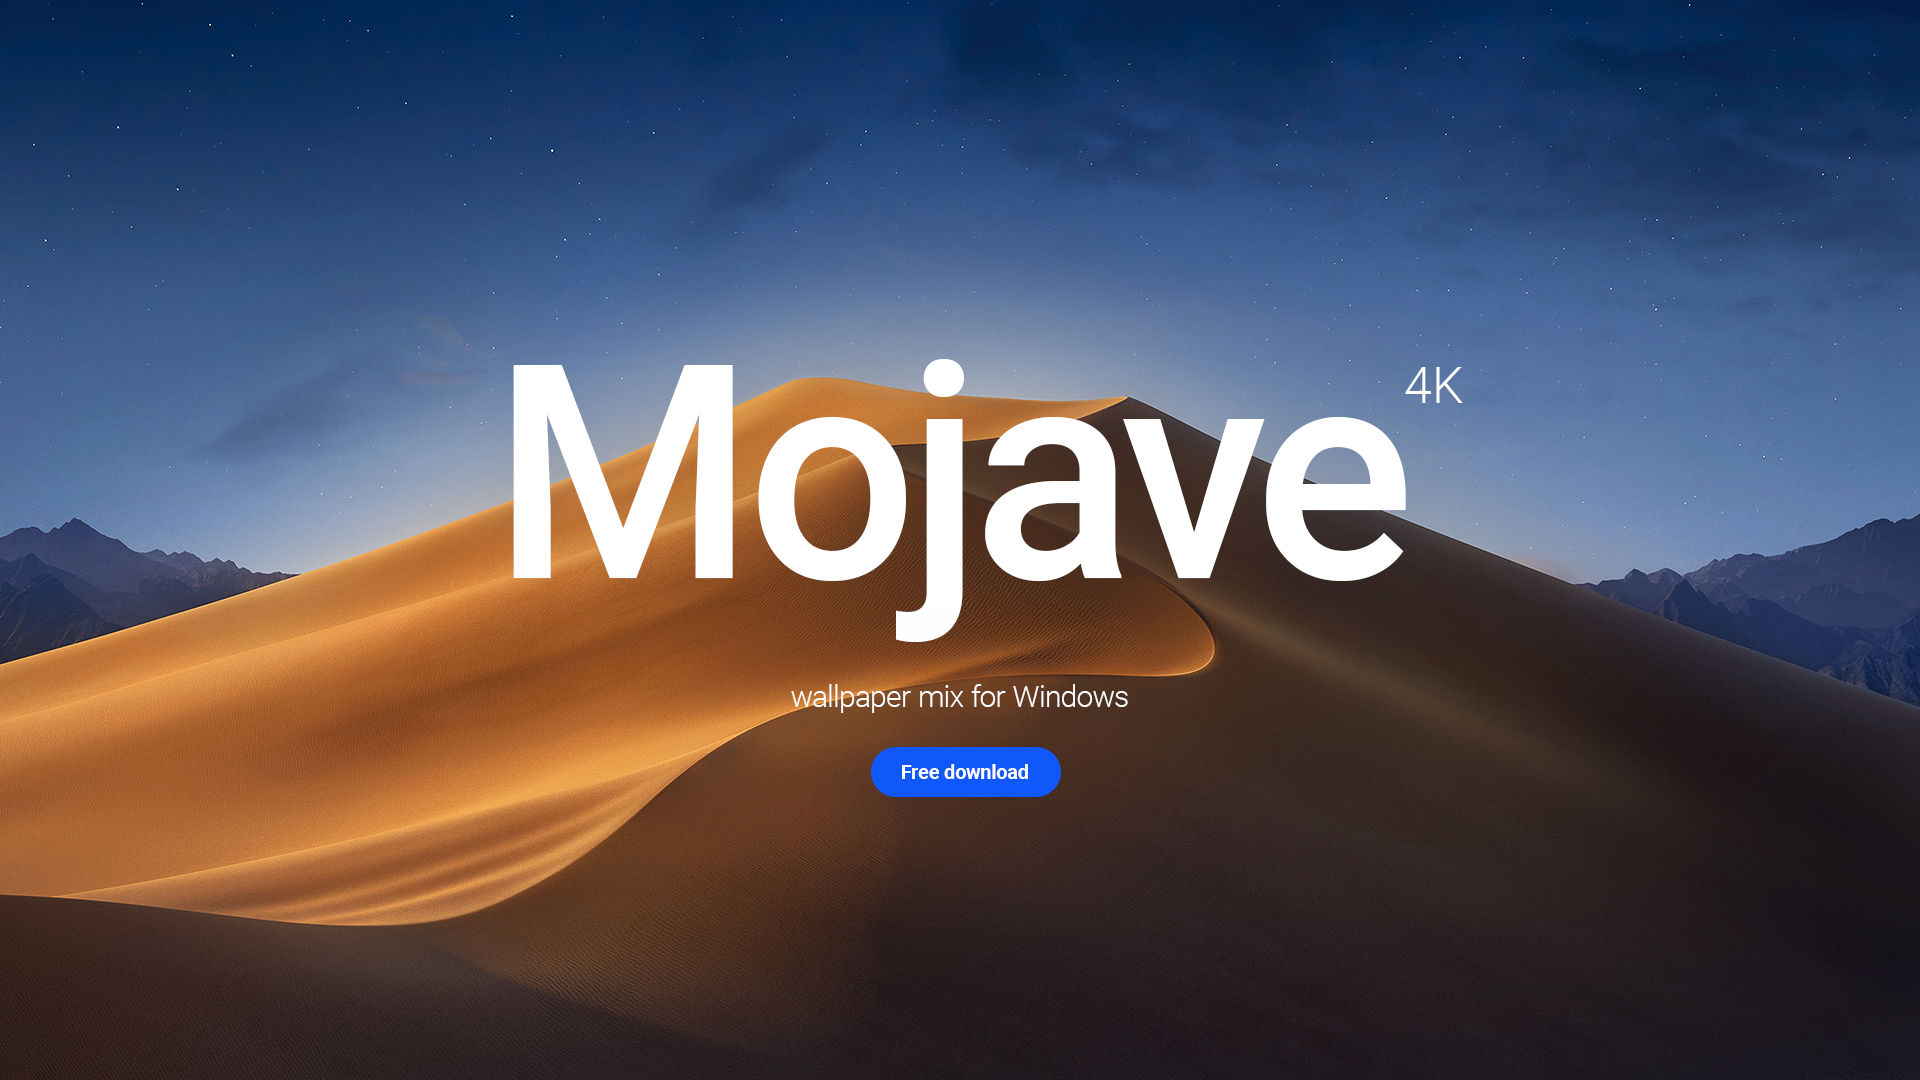 Apple Mojave Wallpaper mix for Windows 4K FREE on Behance